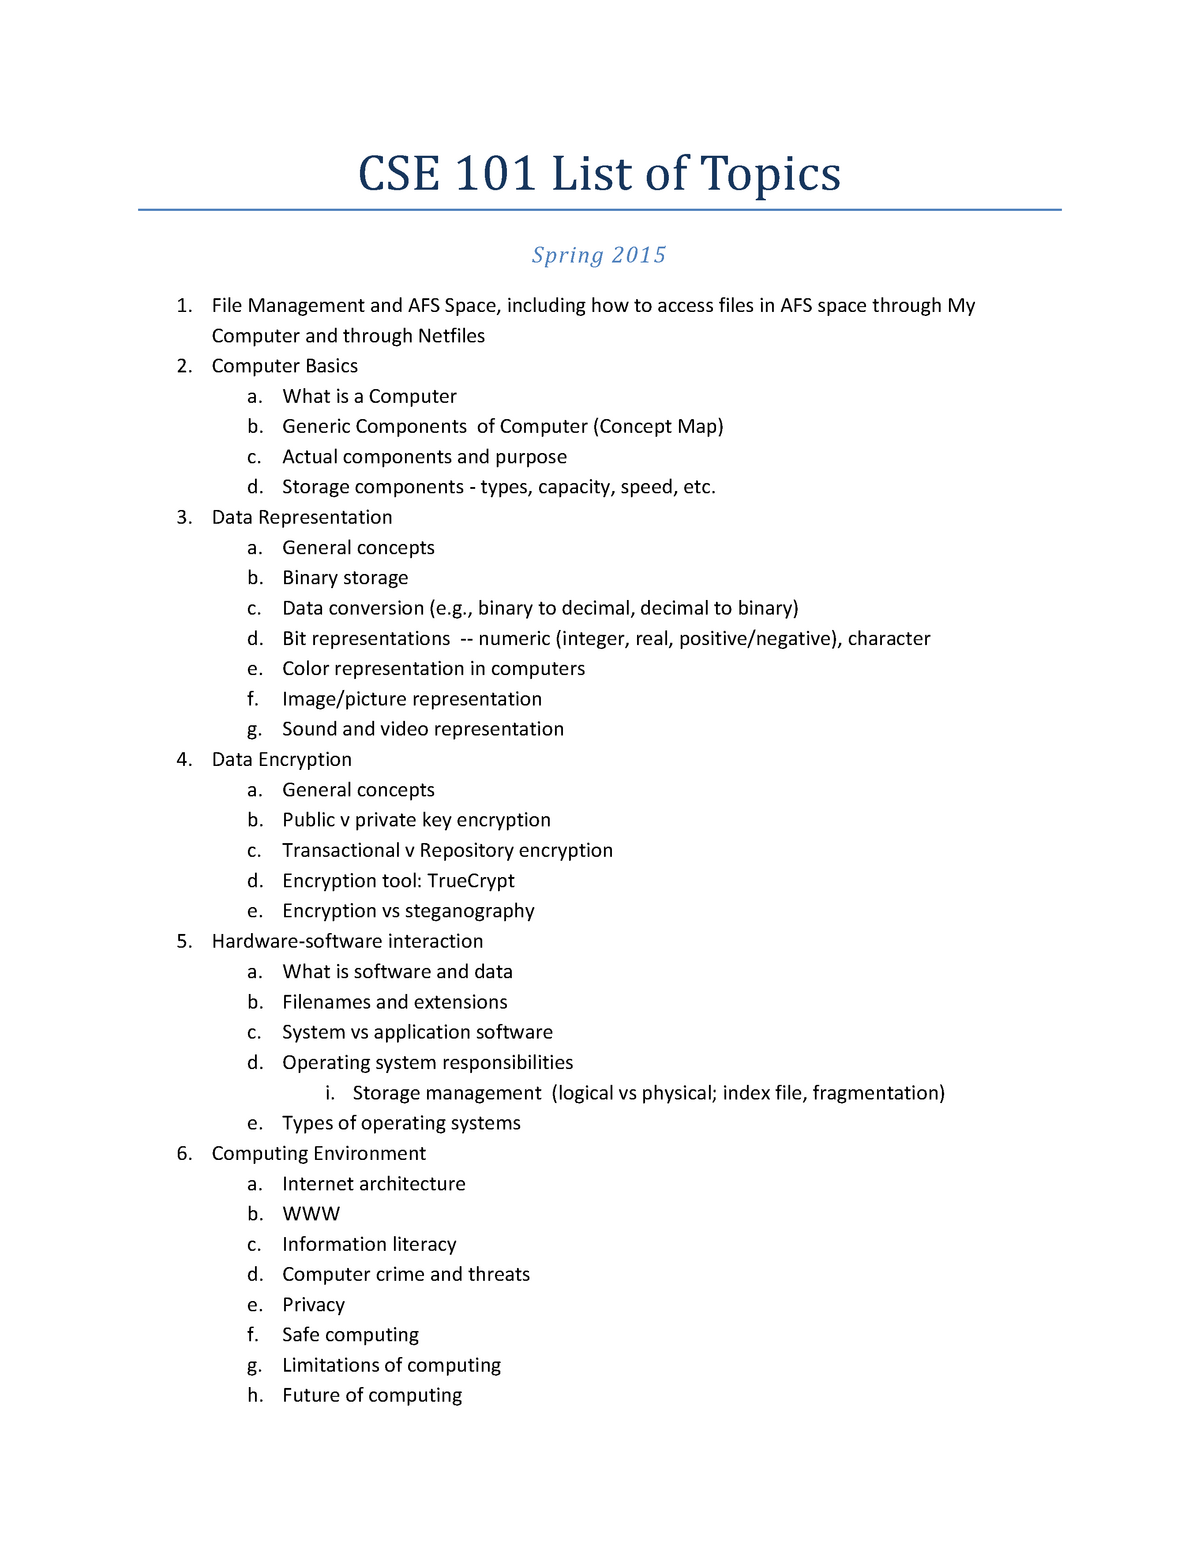 List Of Topics CSE101 SS15 CSE 101 List of Topics Spring 201 5 File